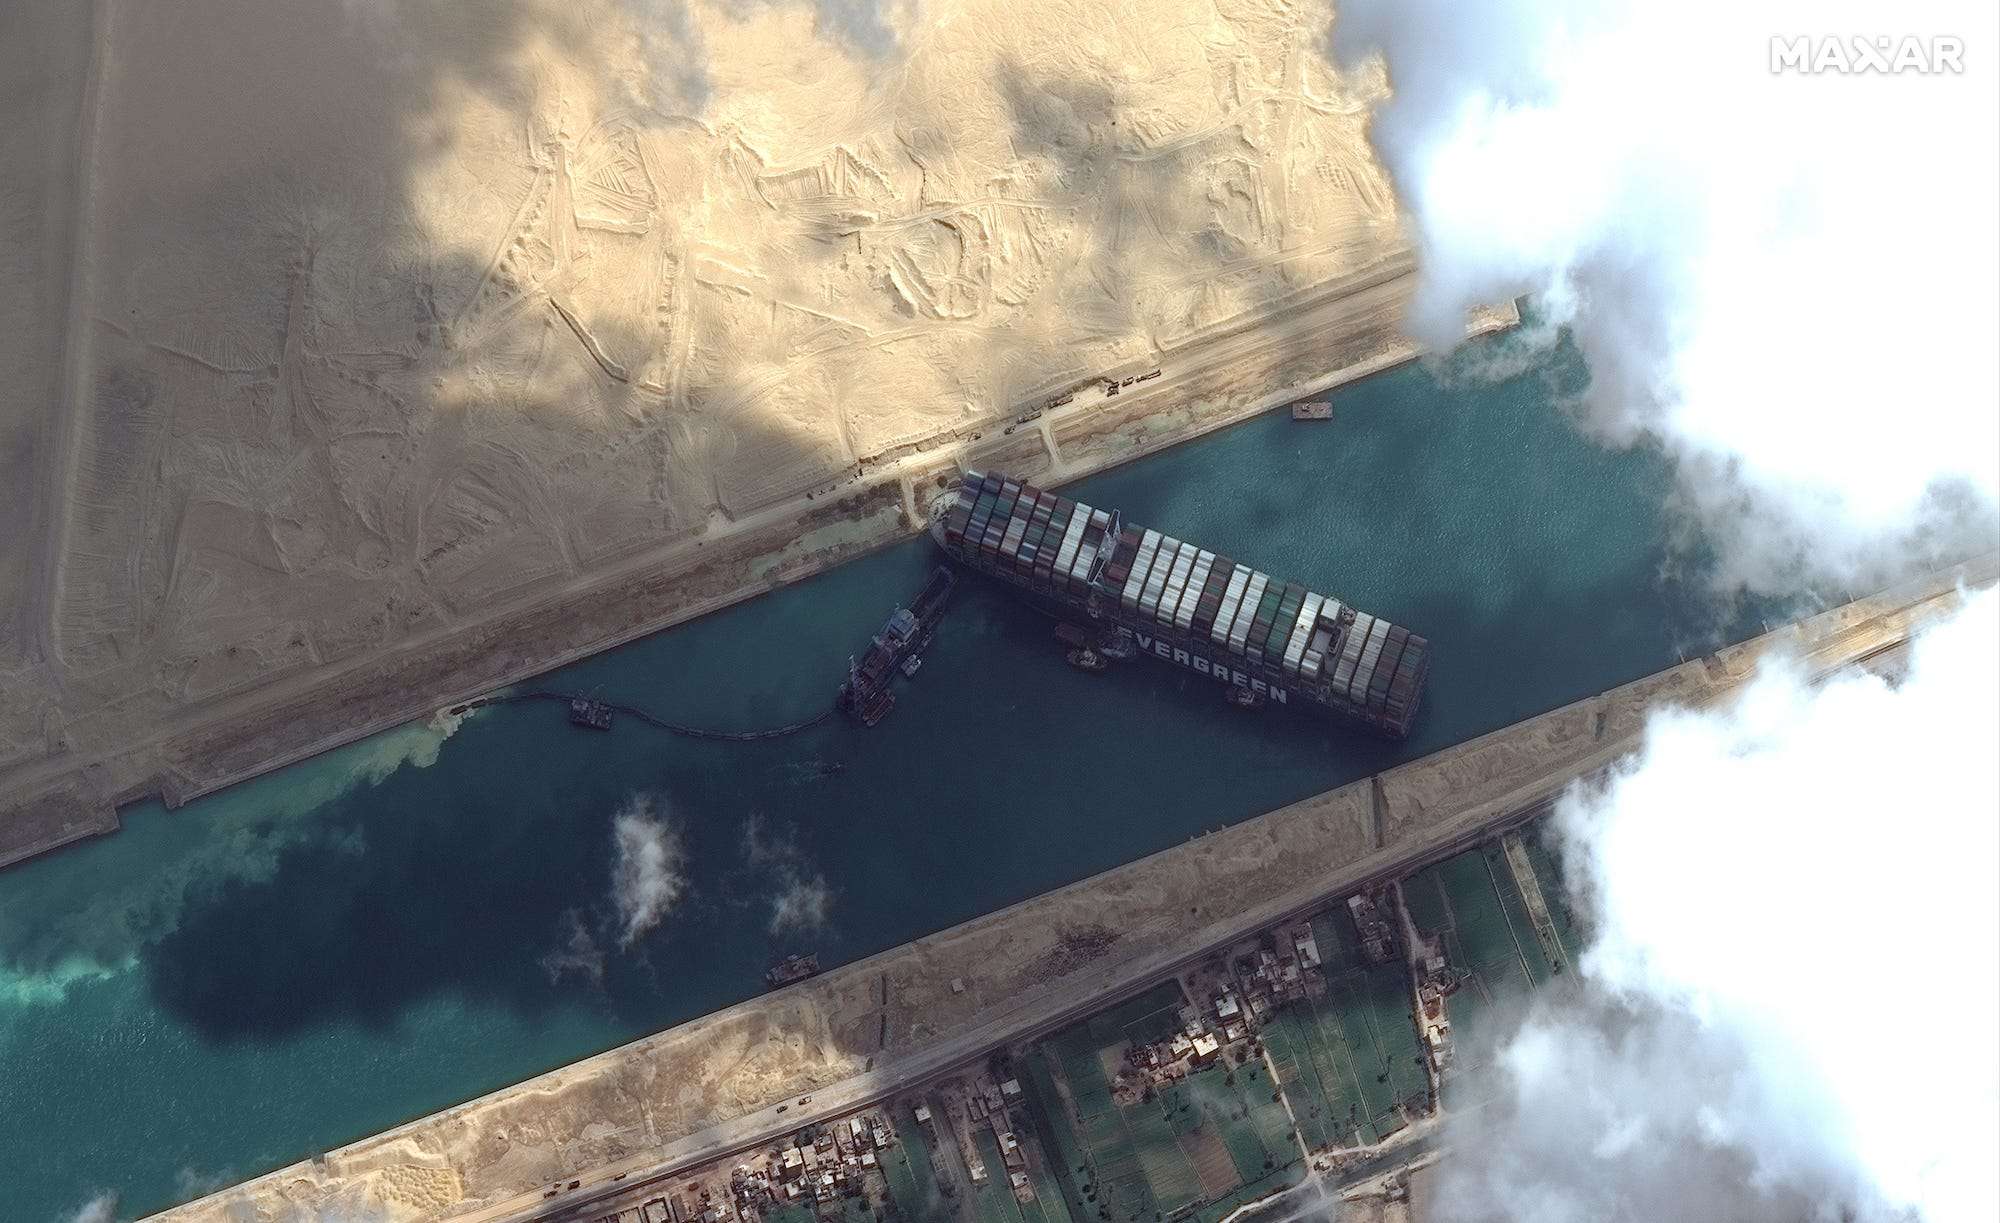 Satellite images show the massive cargo ship still stuck in the Suez